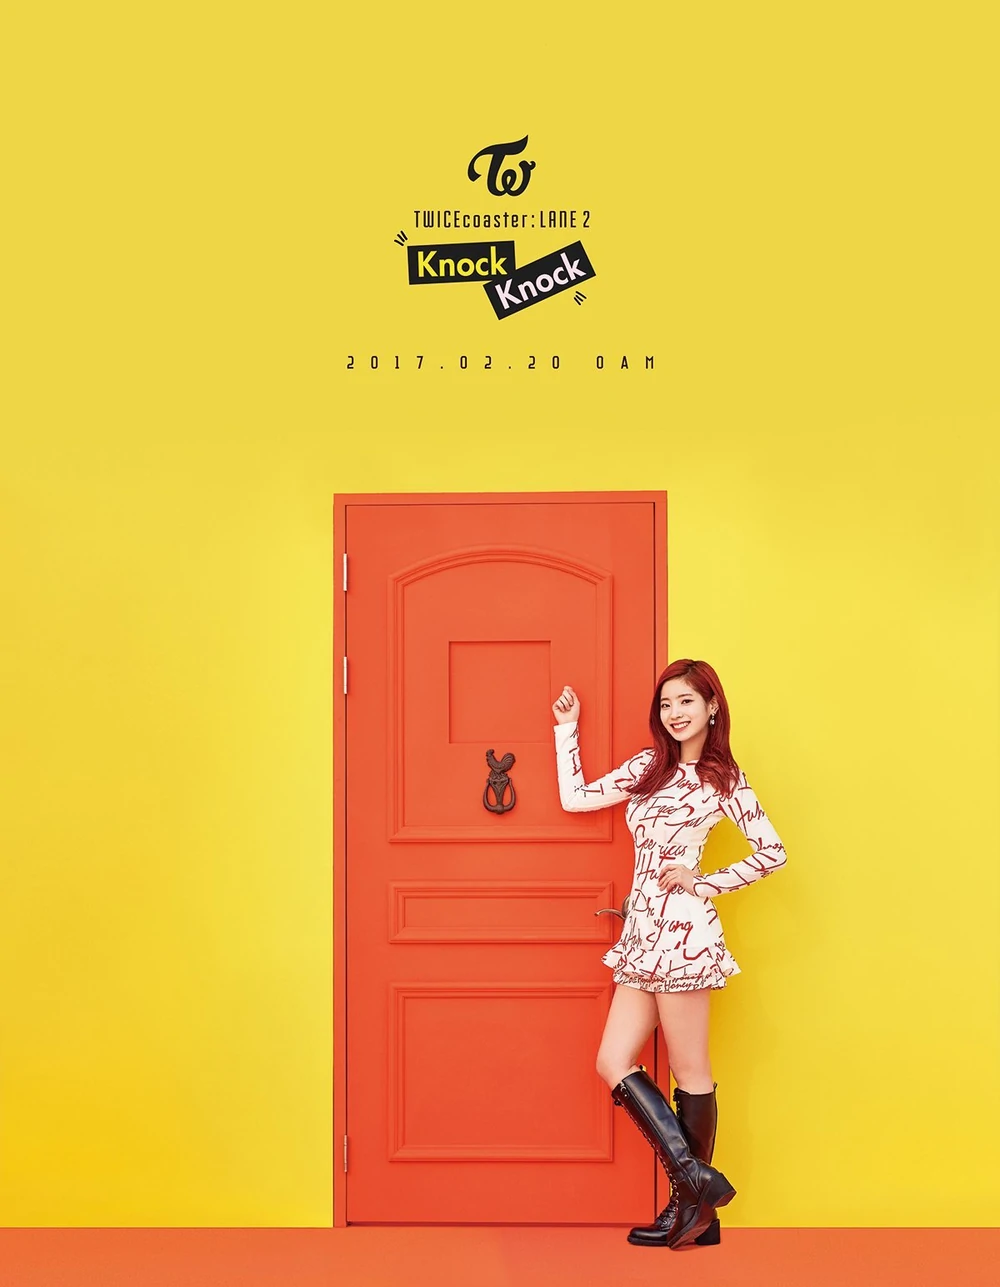 Twice Twicecoaster: Lane 2 Dahyun Concept Teaser Picture Image Photo Kpop K-Concept 2